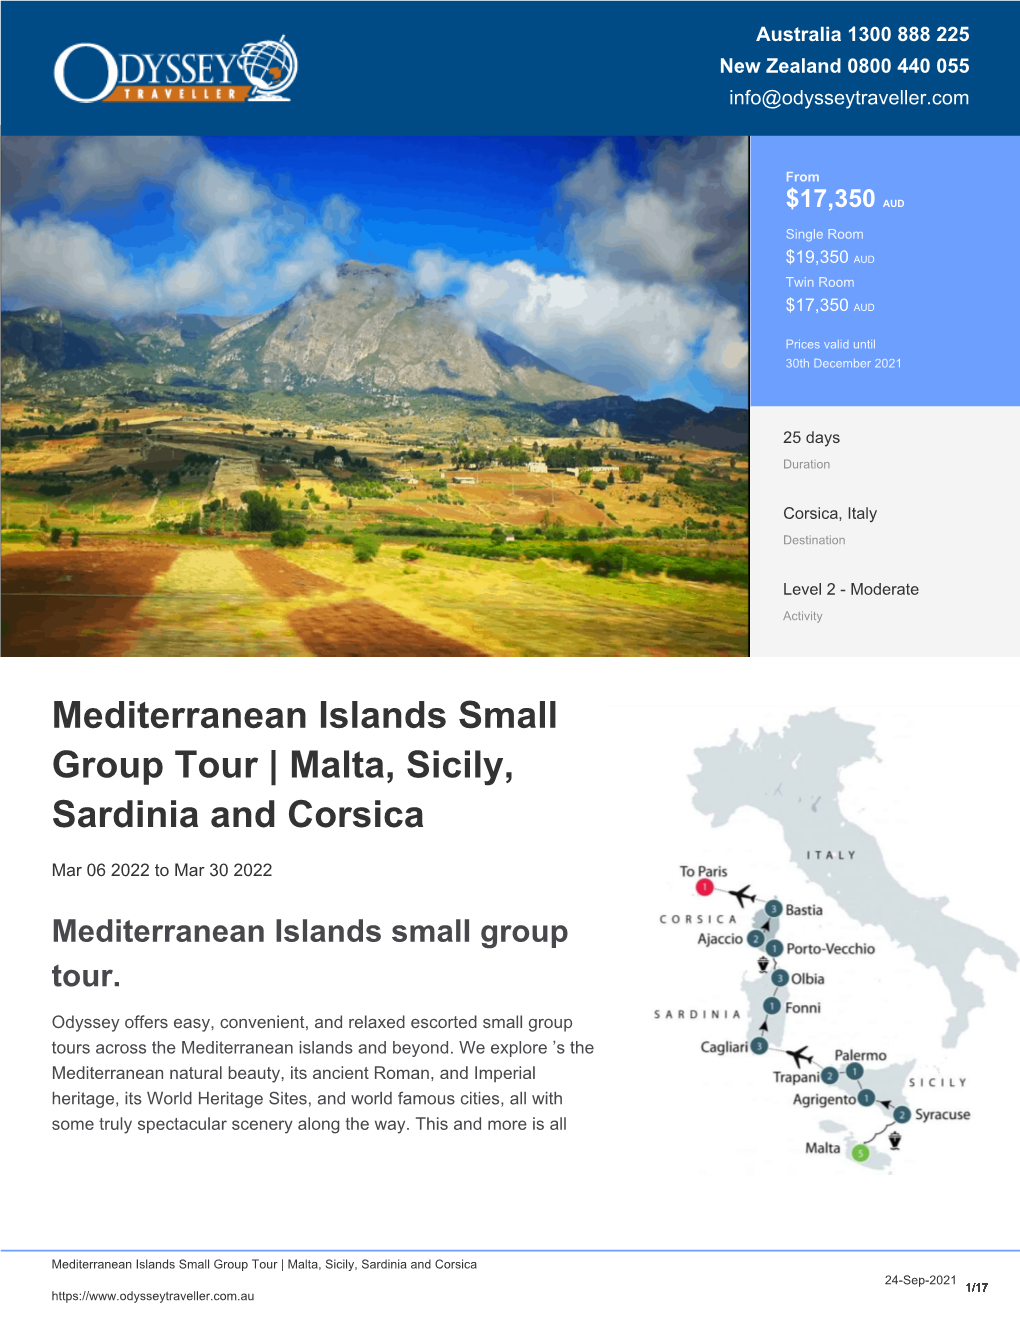 Malta, Sicily, Sardinia, Corsica Small Group Tours | Odyssey Traveller